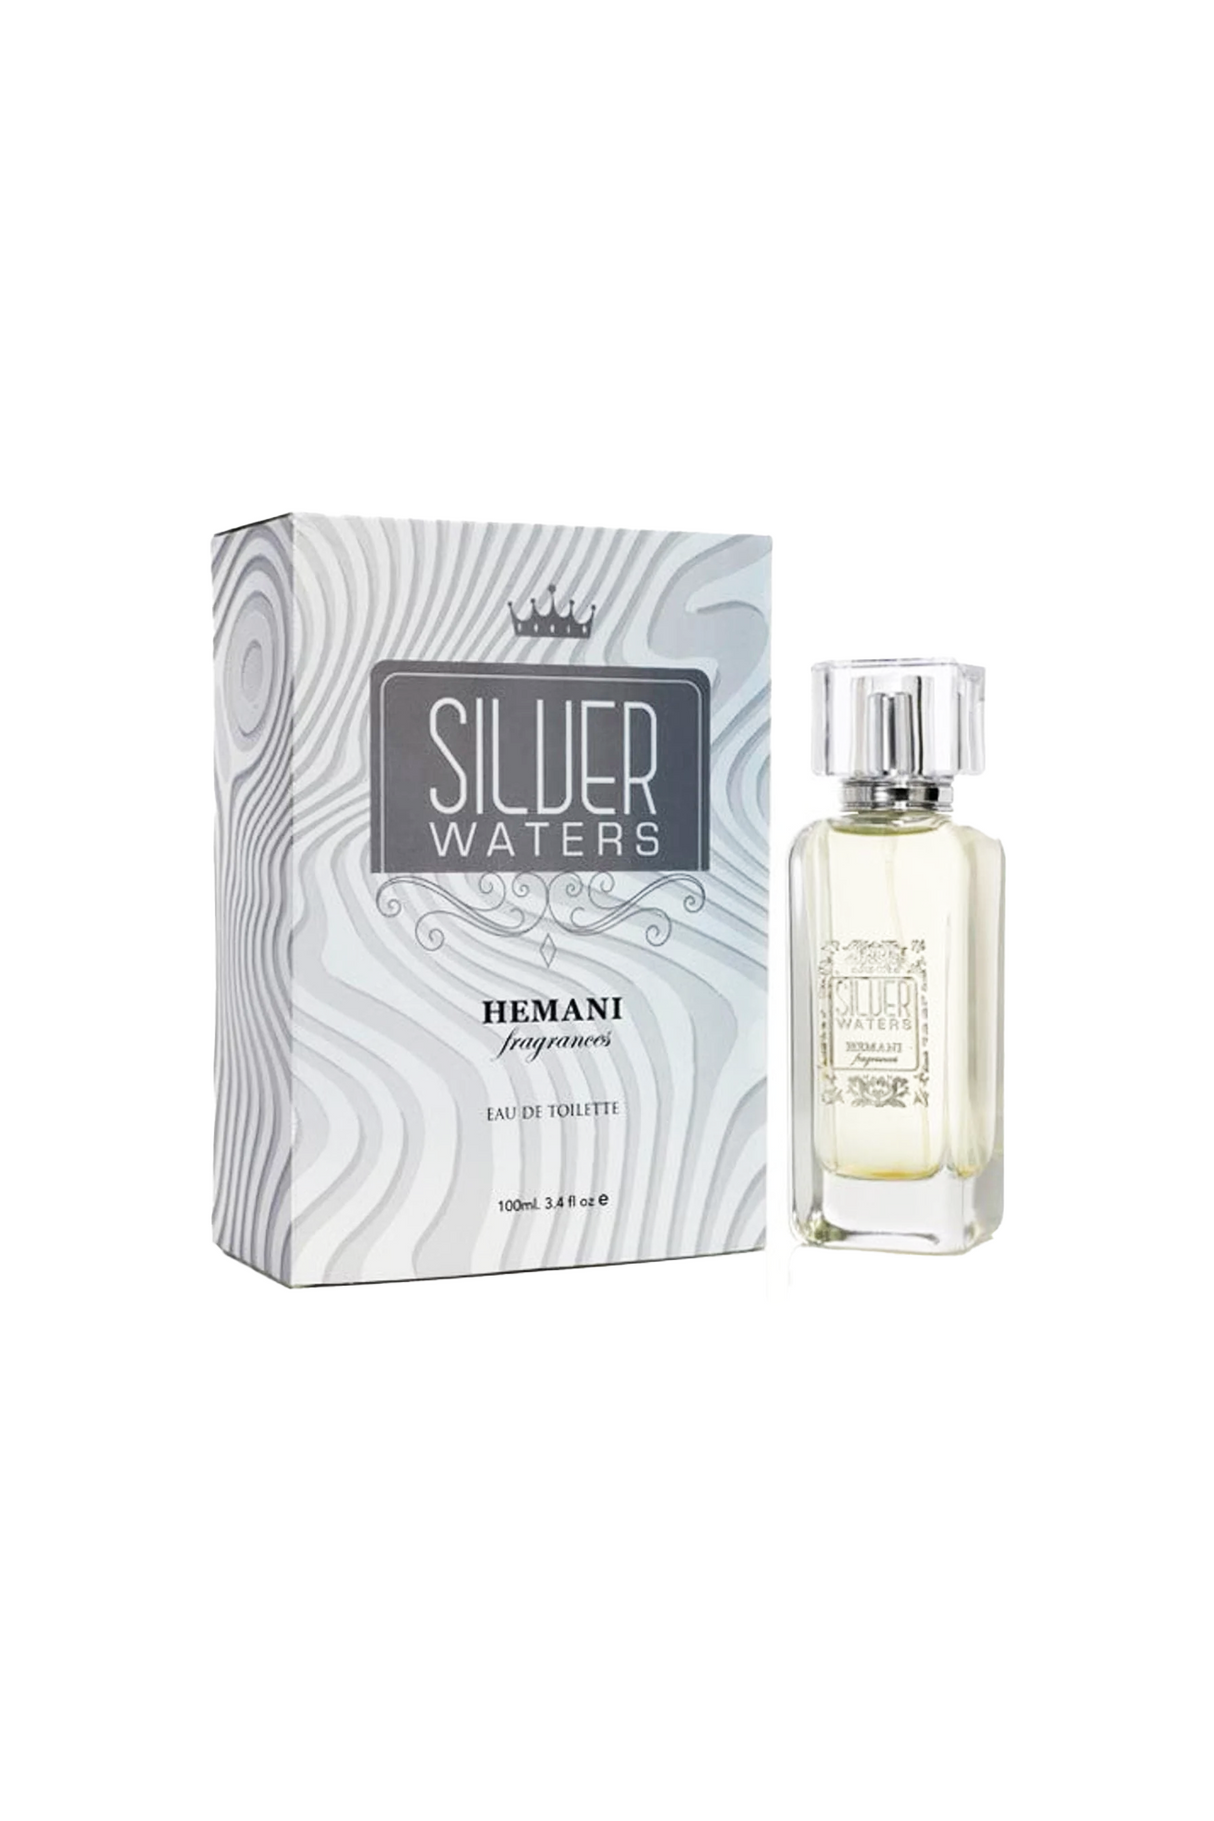 hemani perfume silver waters men 100ml